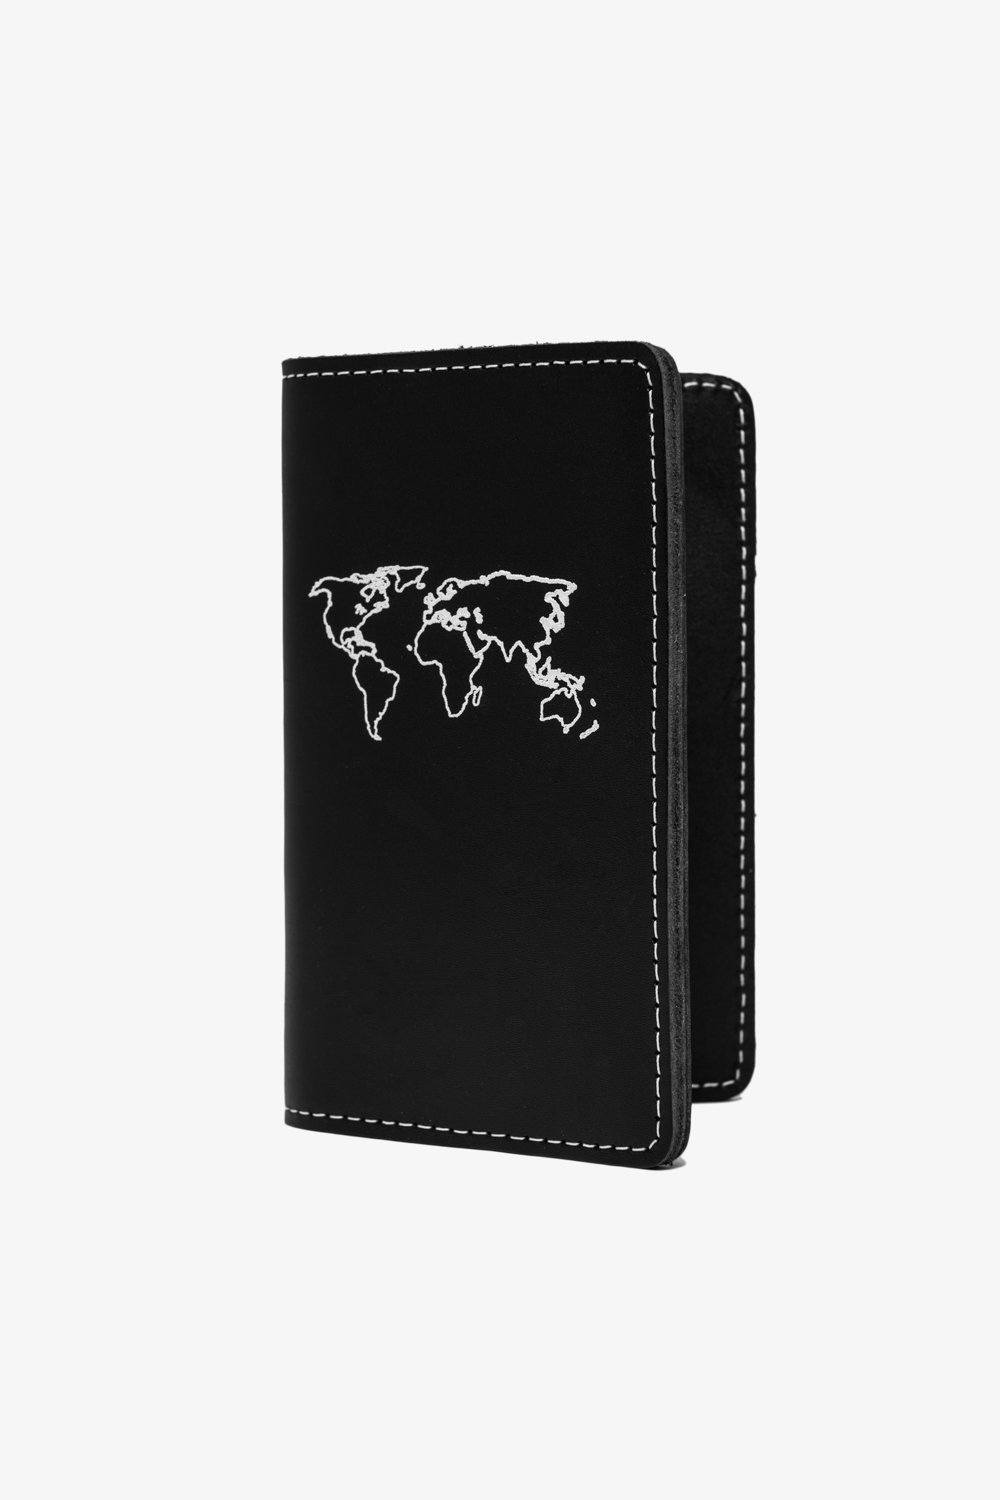 Leather Passport Wallet - Black Accessories Jack + Mulligan 